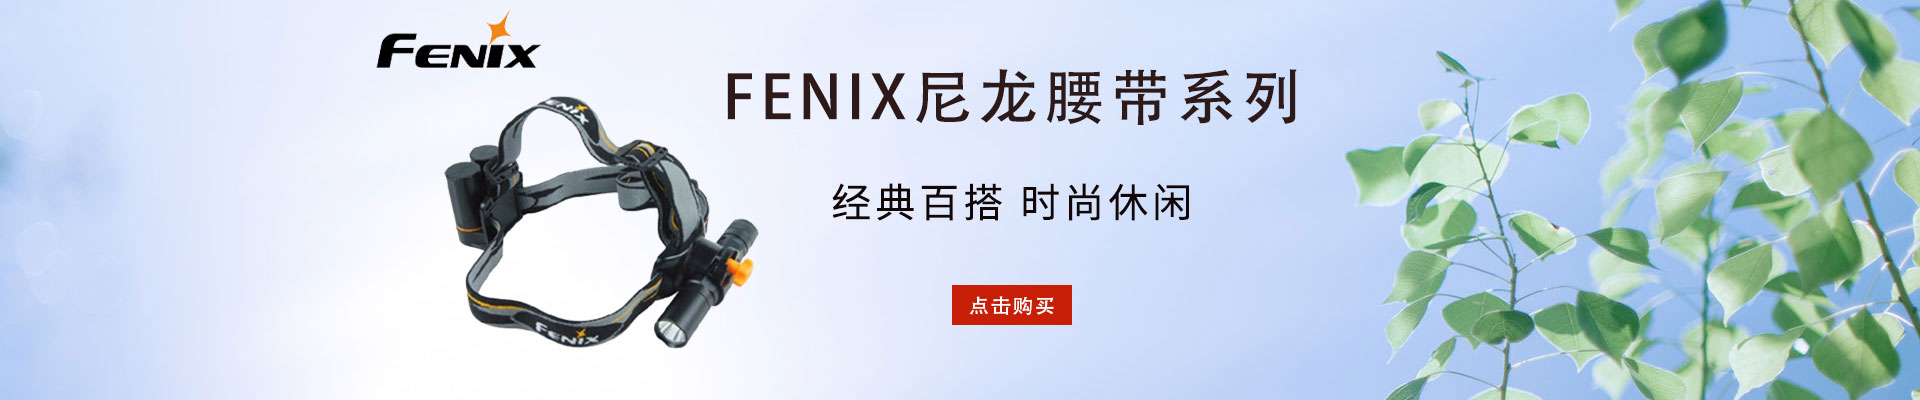 FENIX/朗恒|工具配件